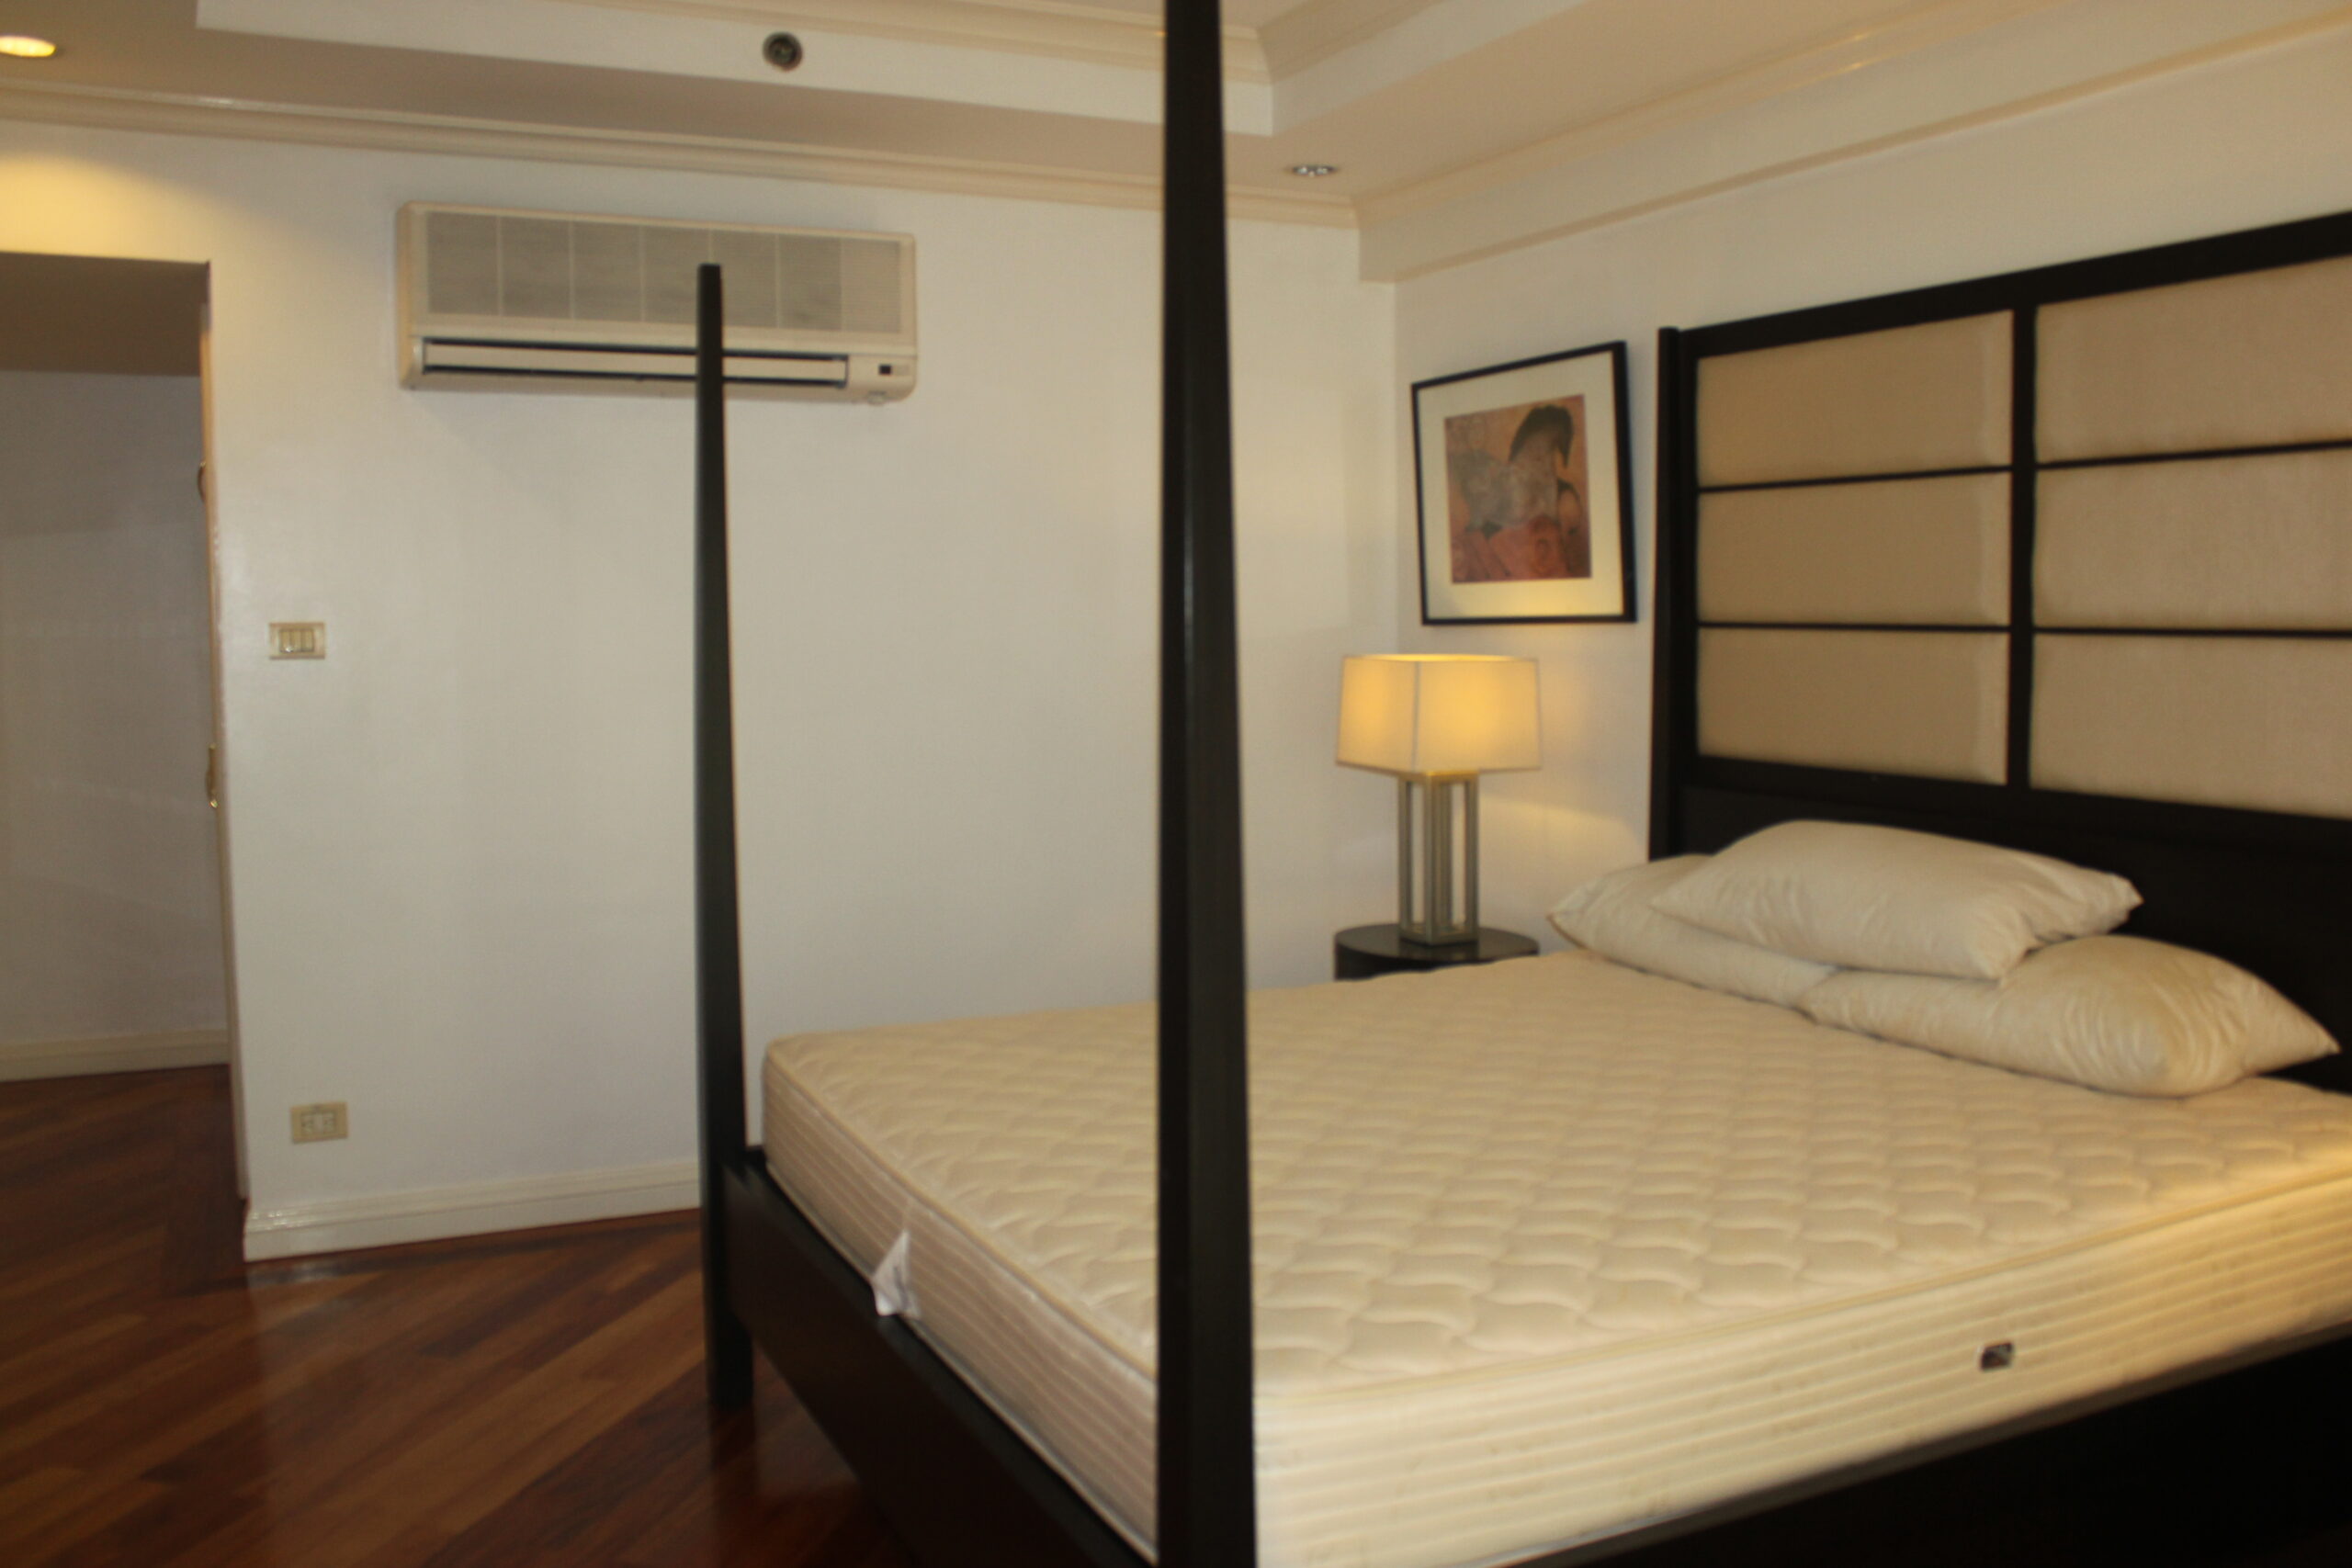 Frazer Place 3 bedrooms condominium for rent in Makati City